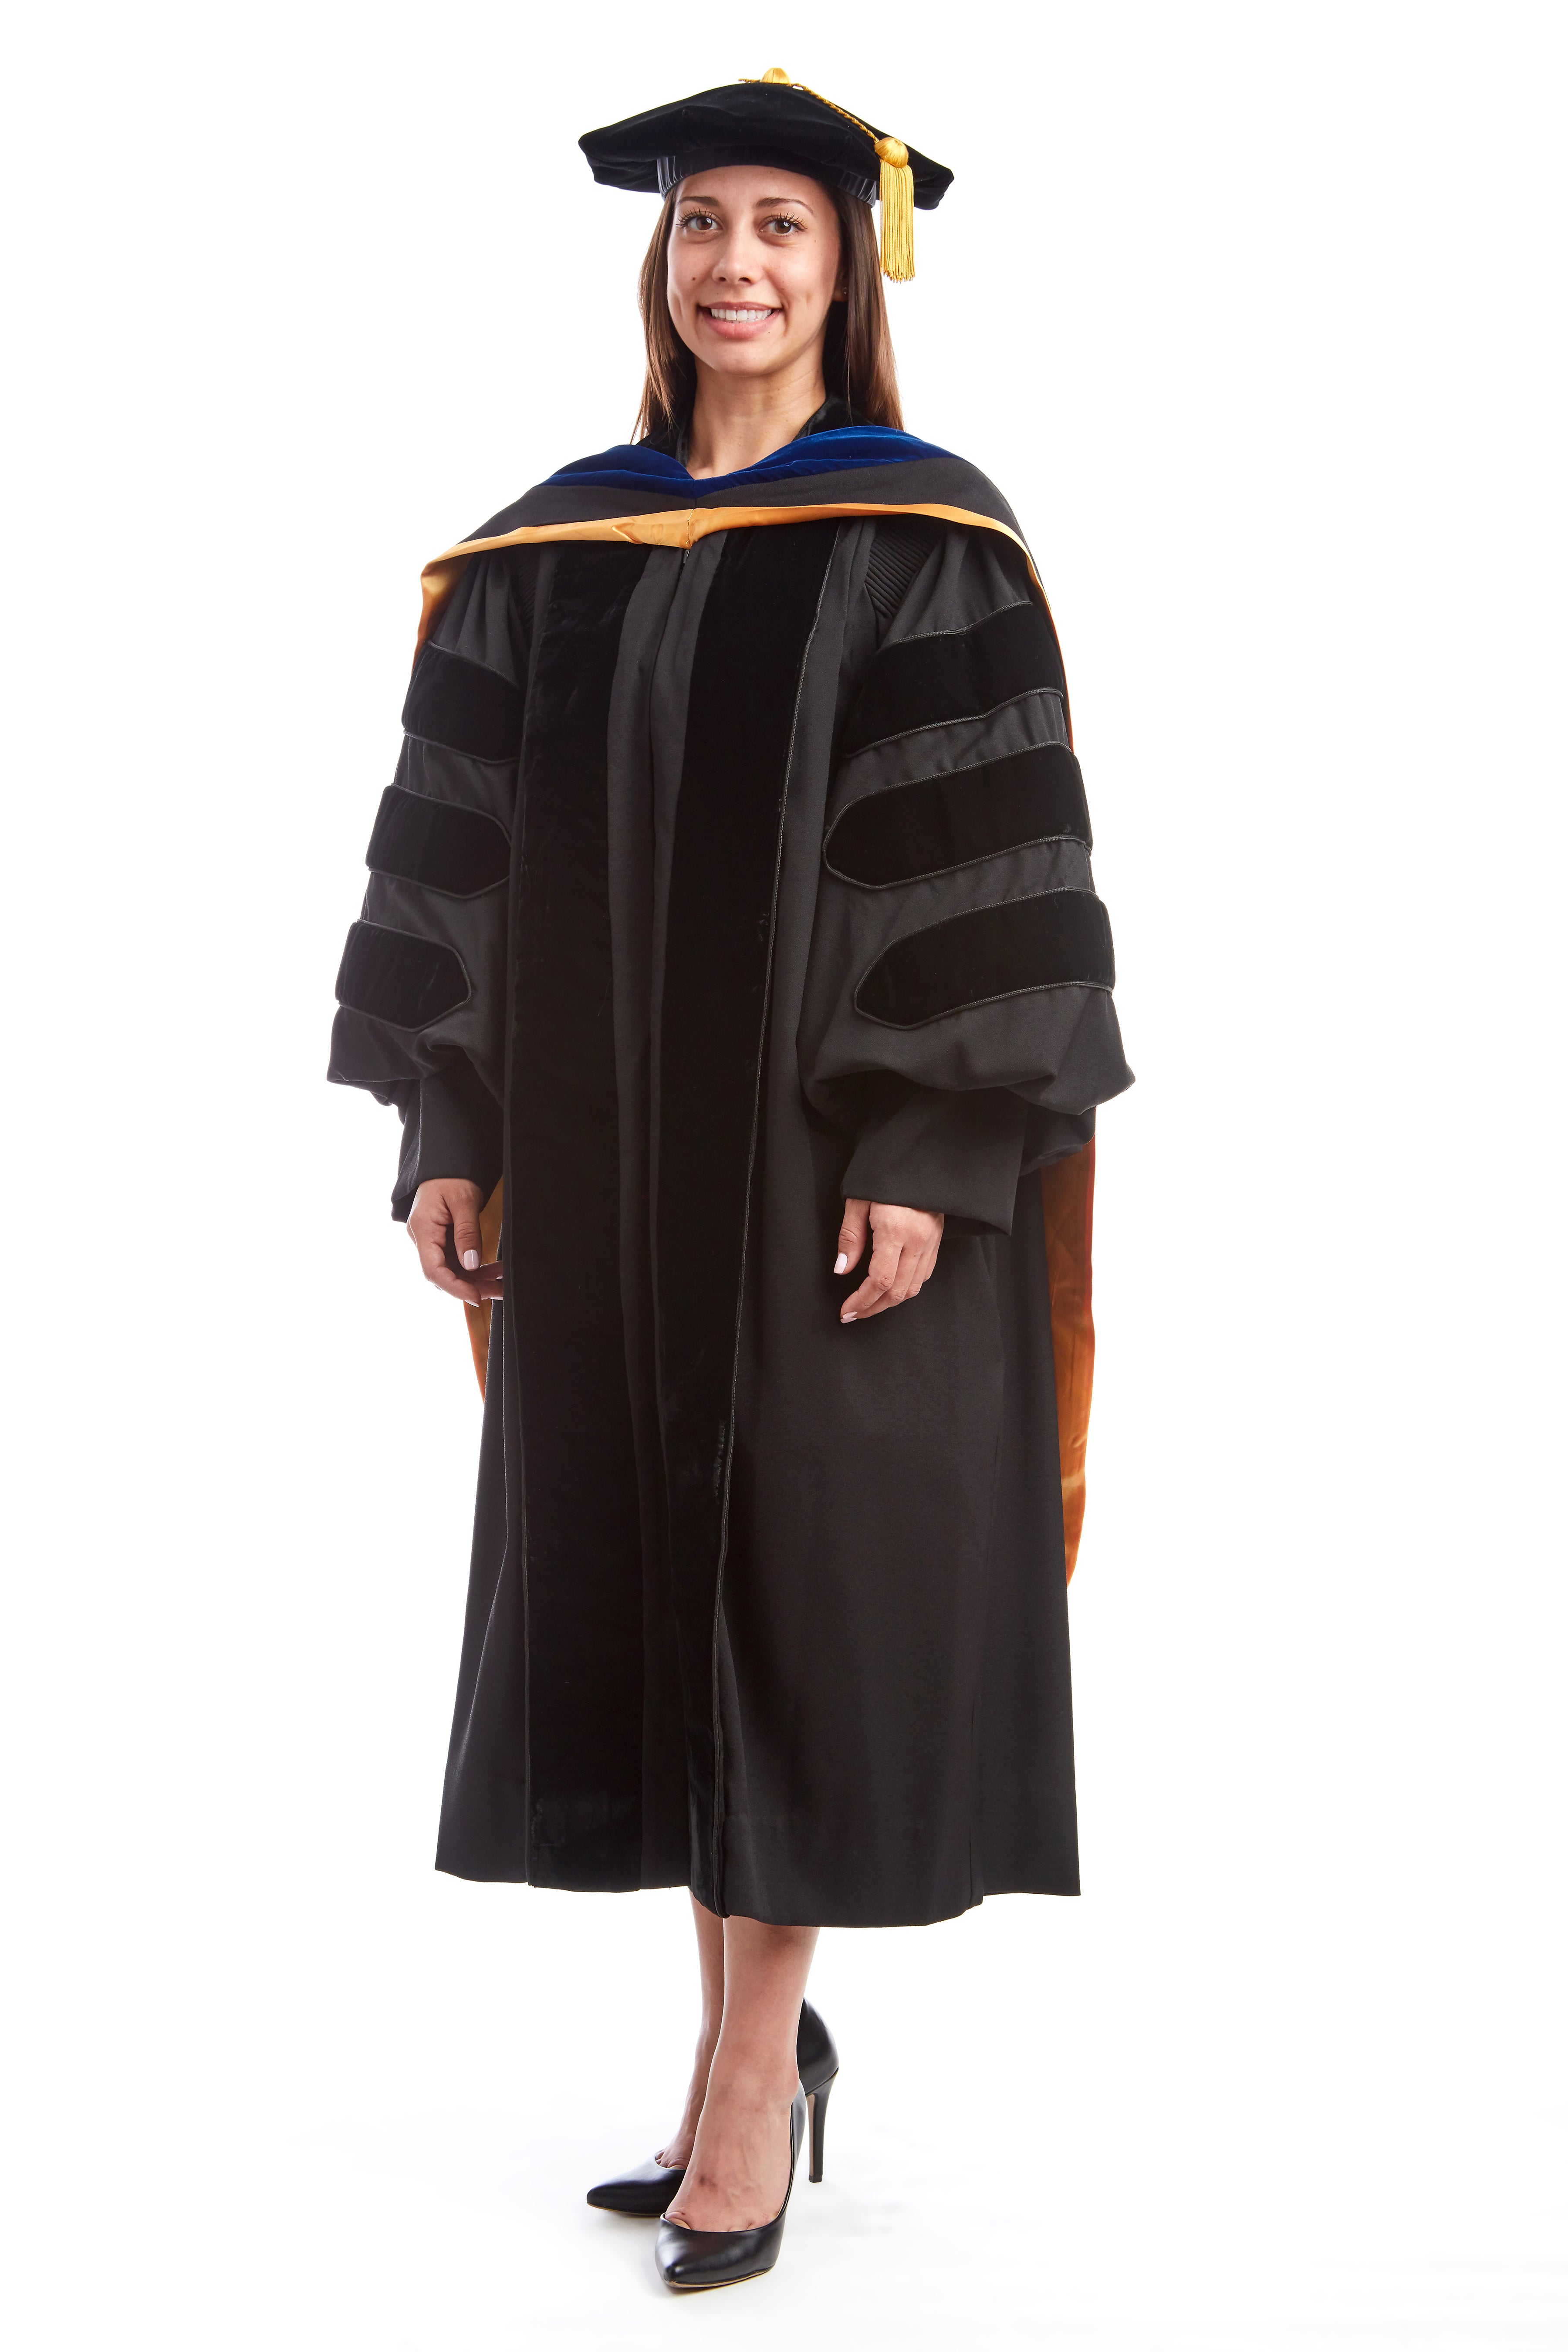 Shiny Cap With Tassel, Gown, & Honor Stole 60” Package| graduate gradu – CA  graduation